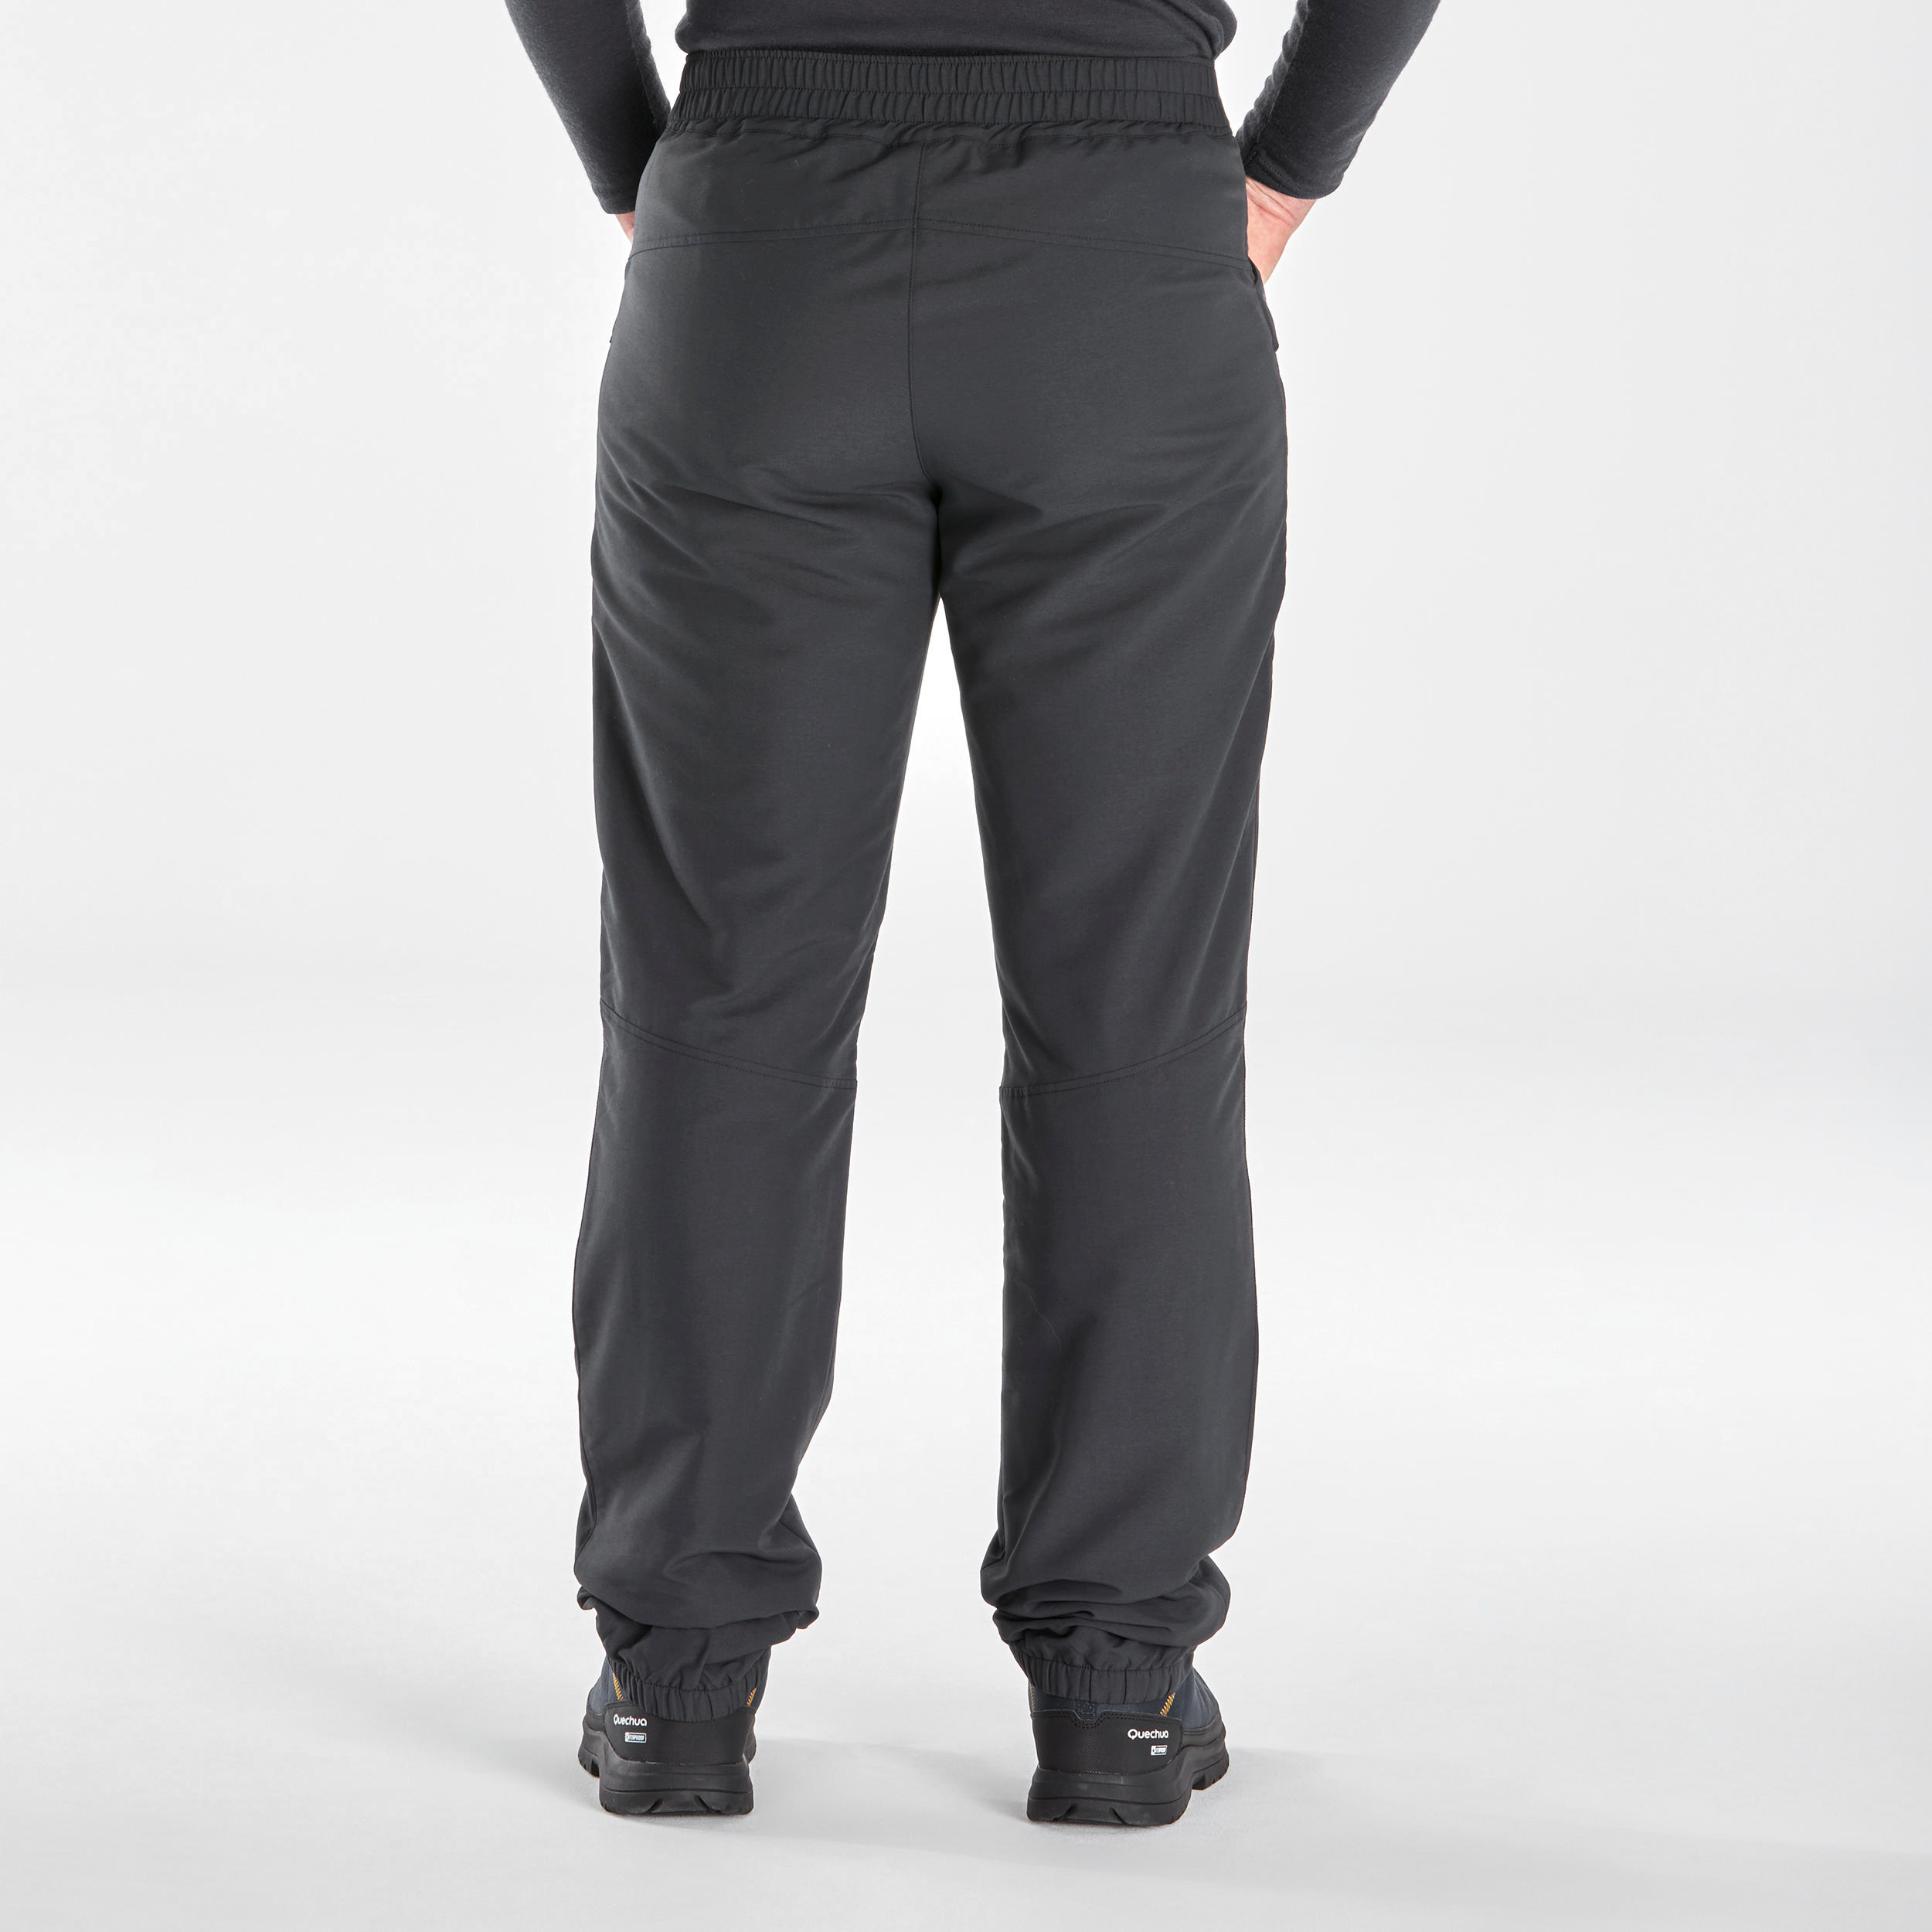 Details more than 247 decathlon warm trousers best